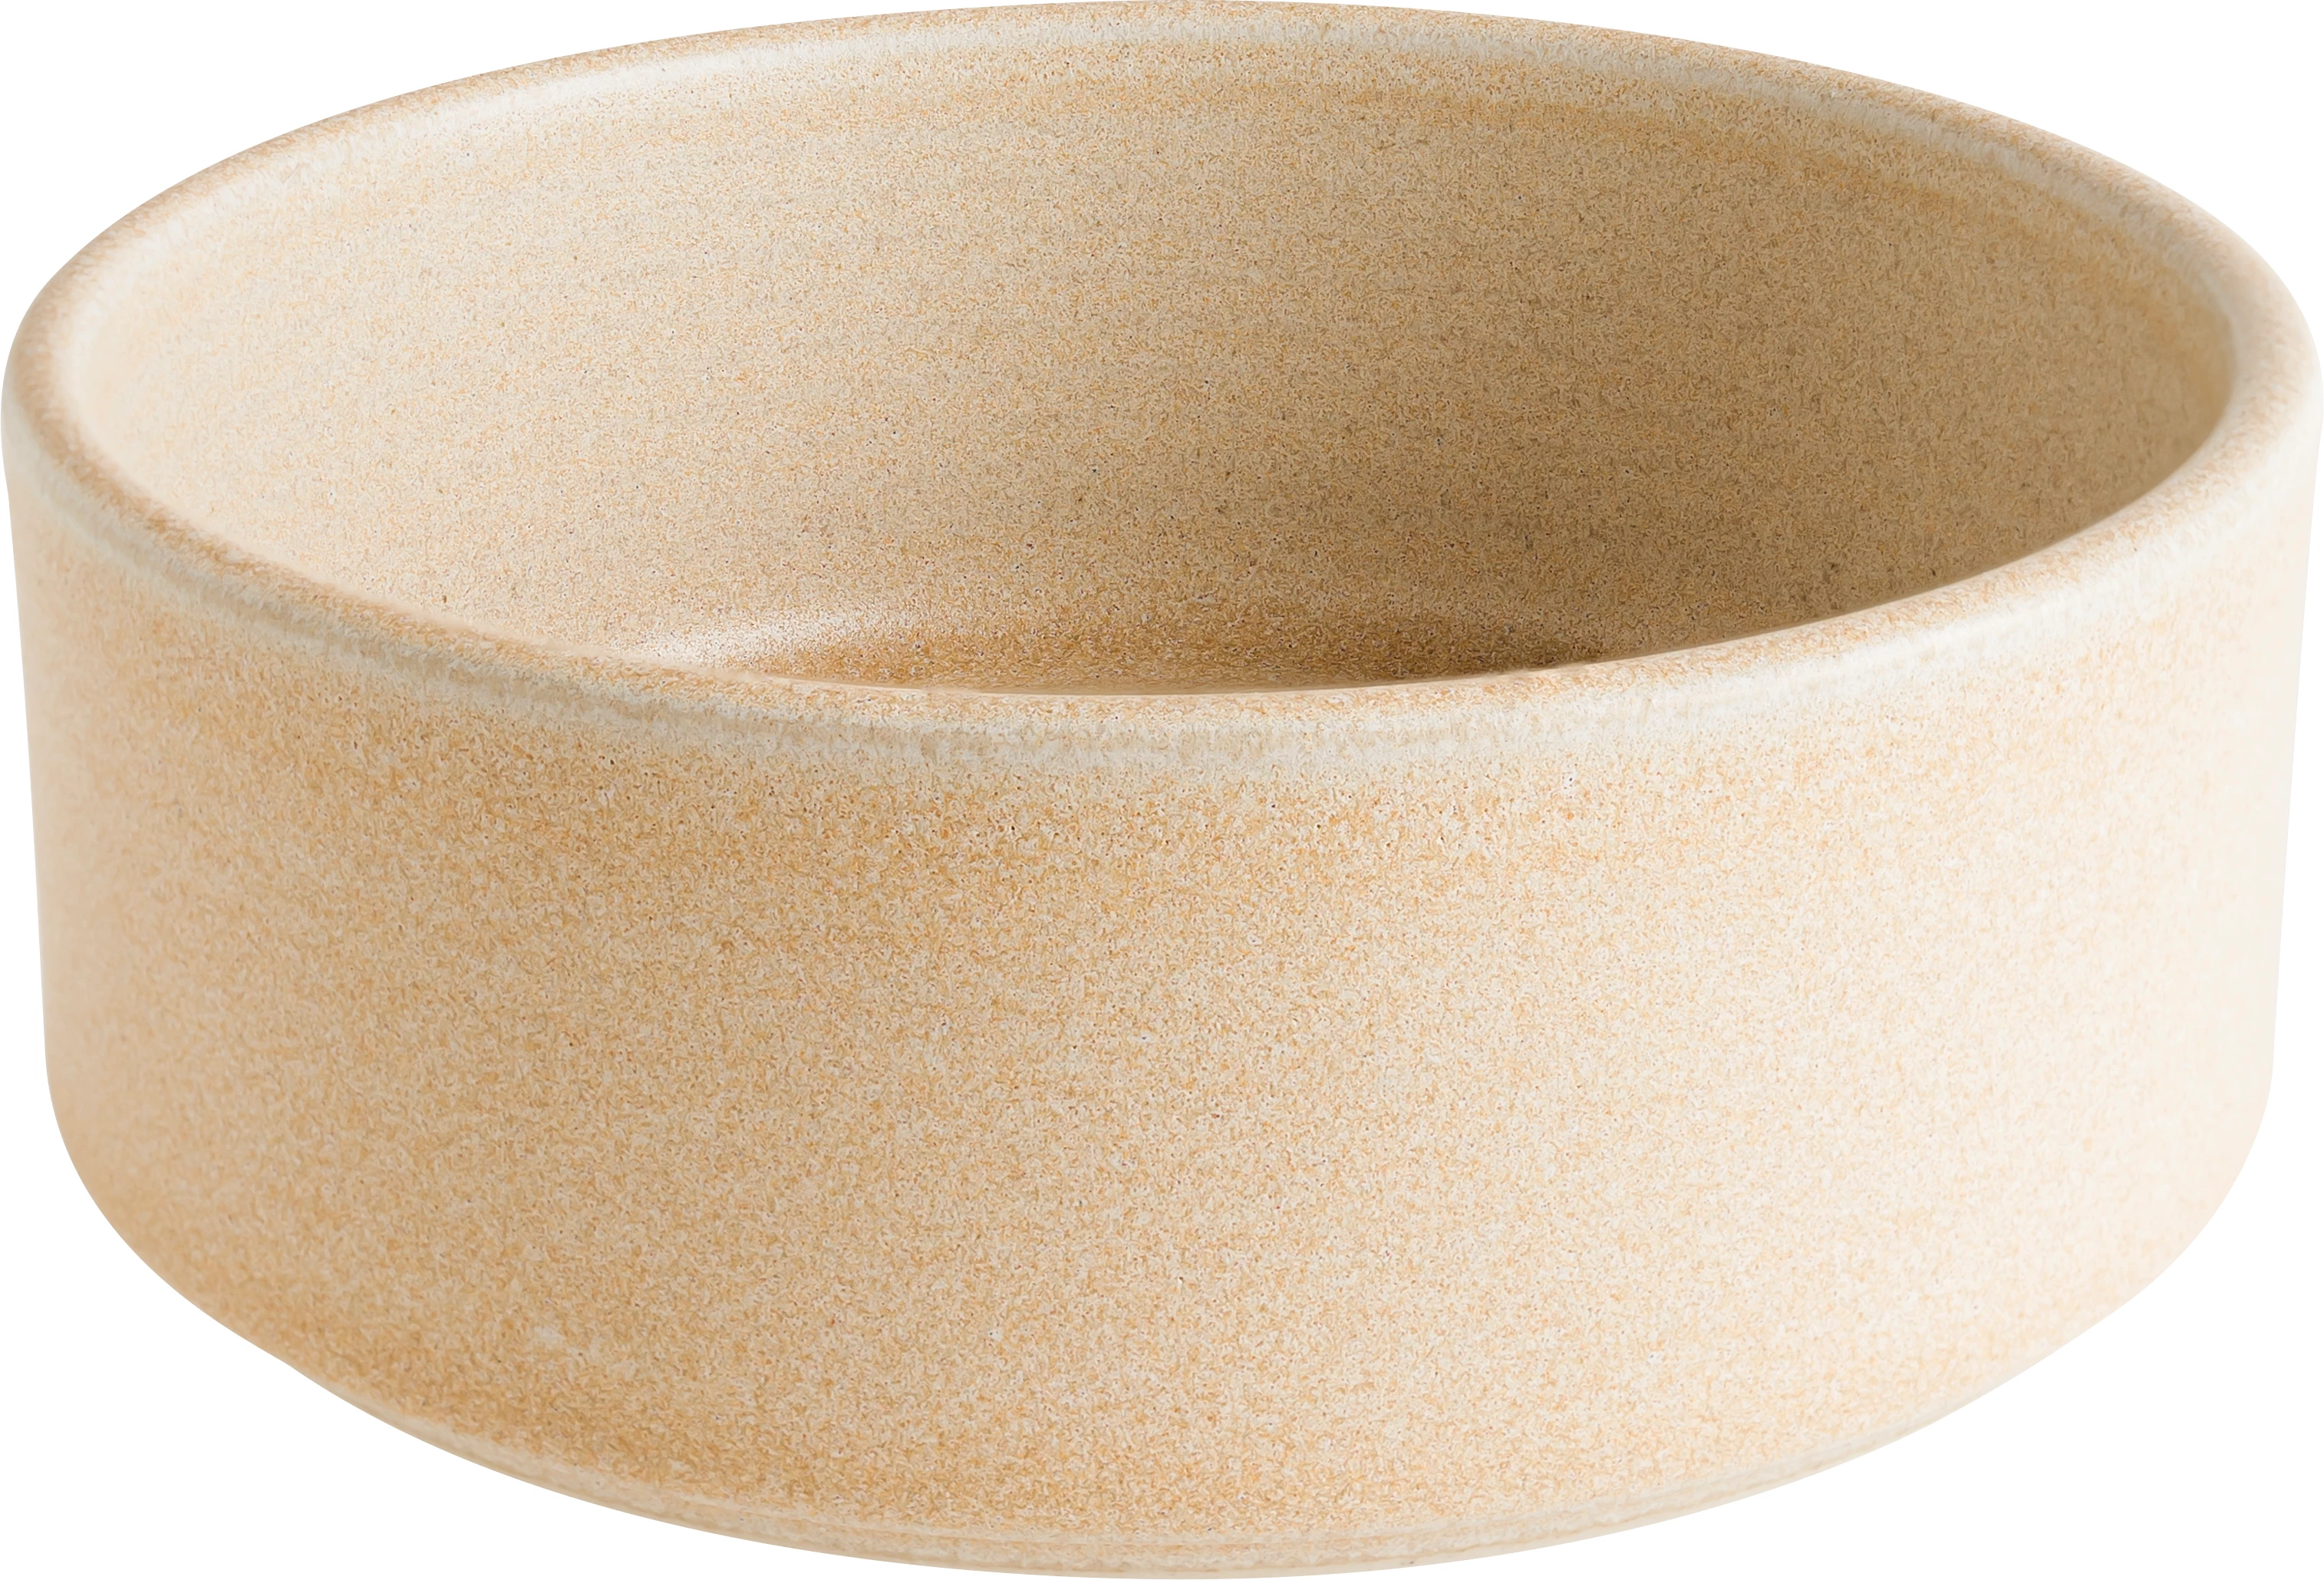 Bonna Mirage skål, sand, 41,5 cl, ø13 cm